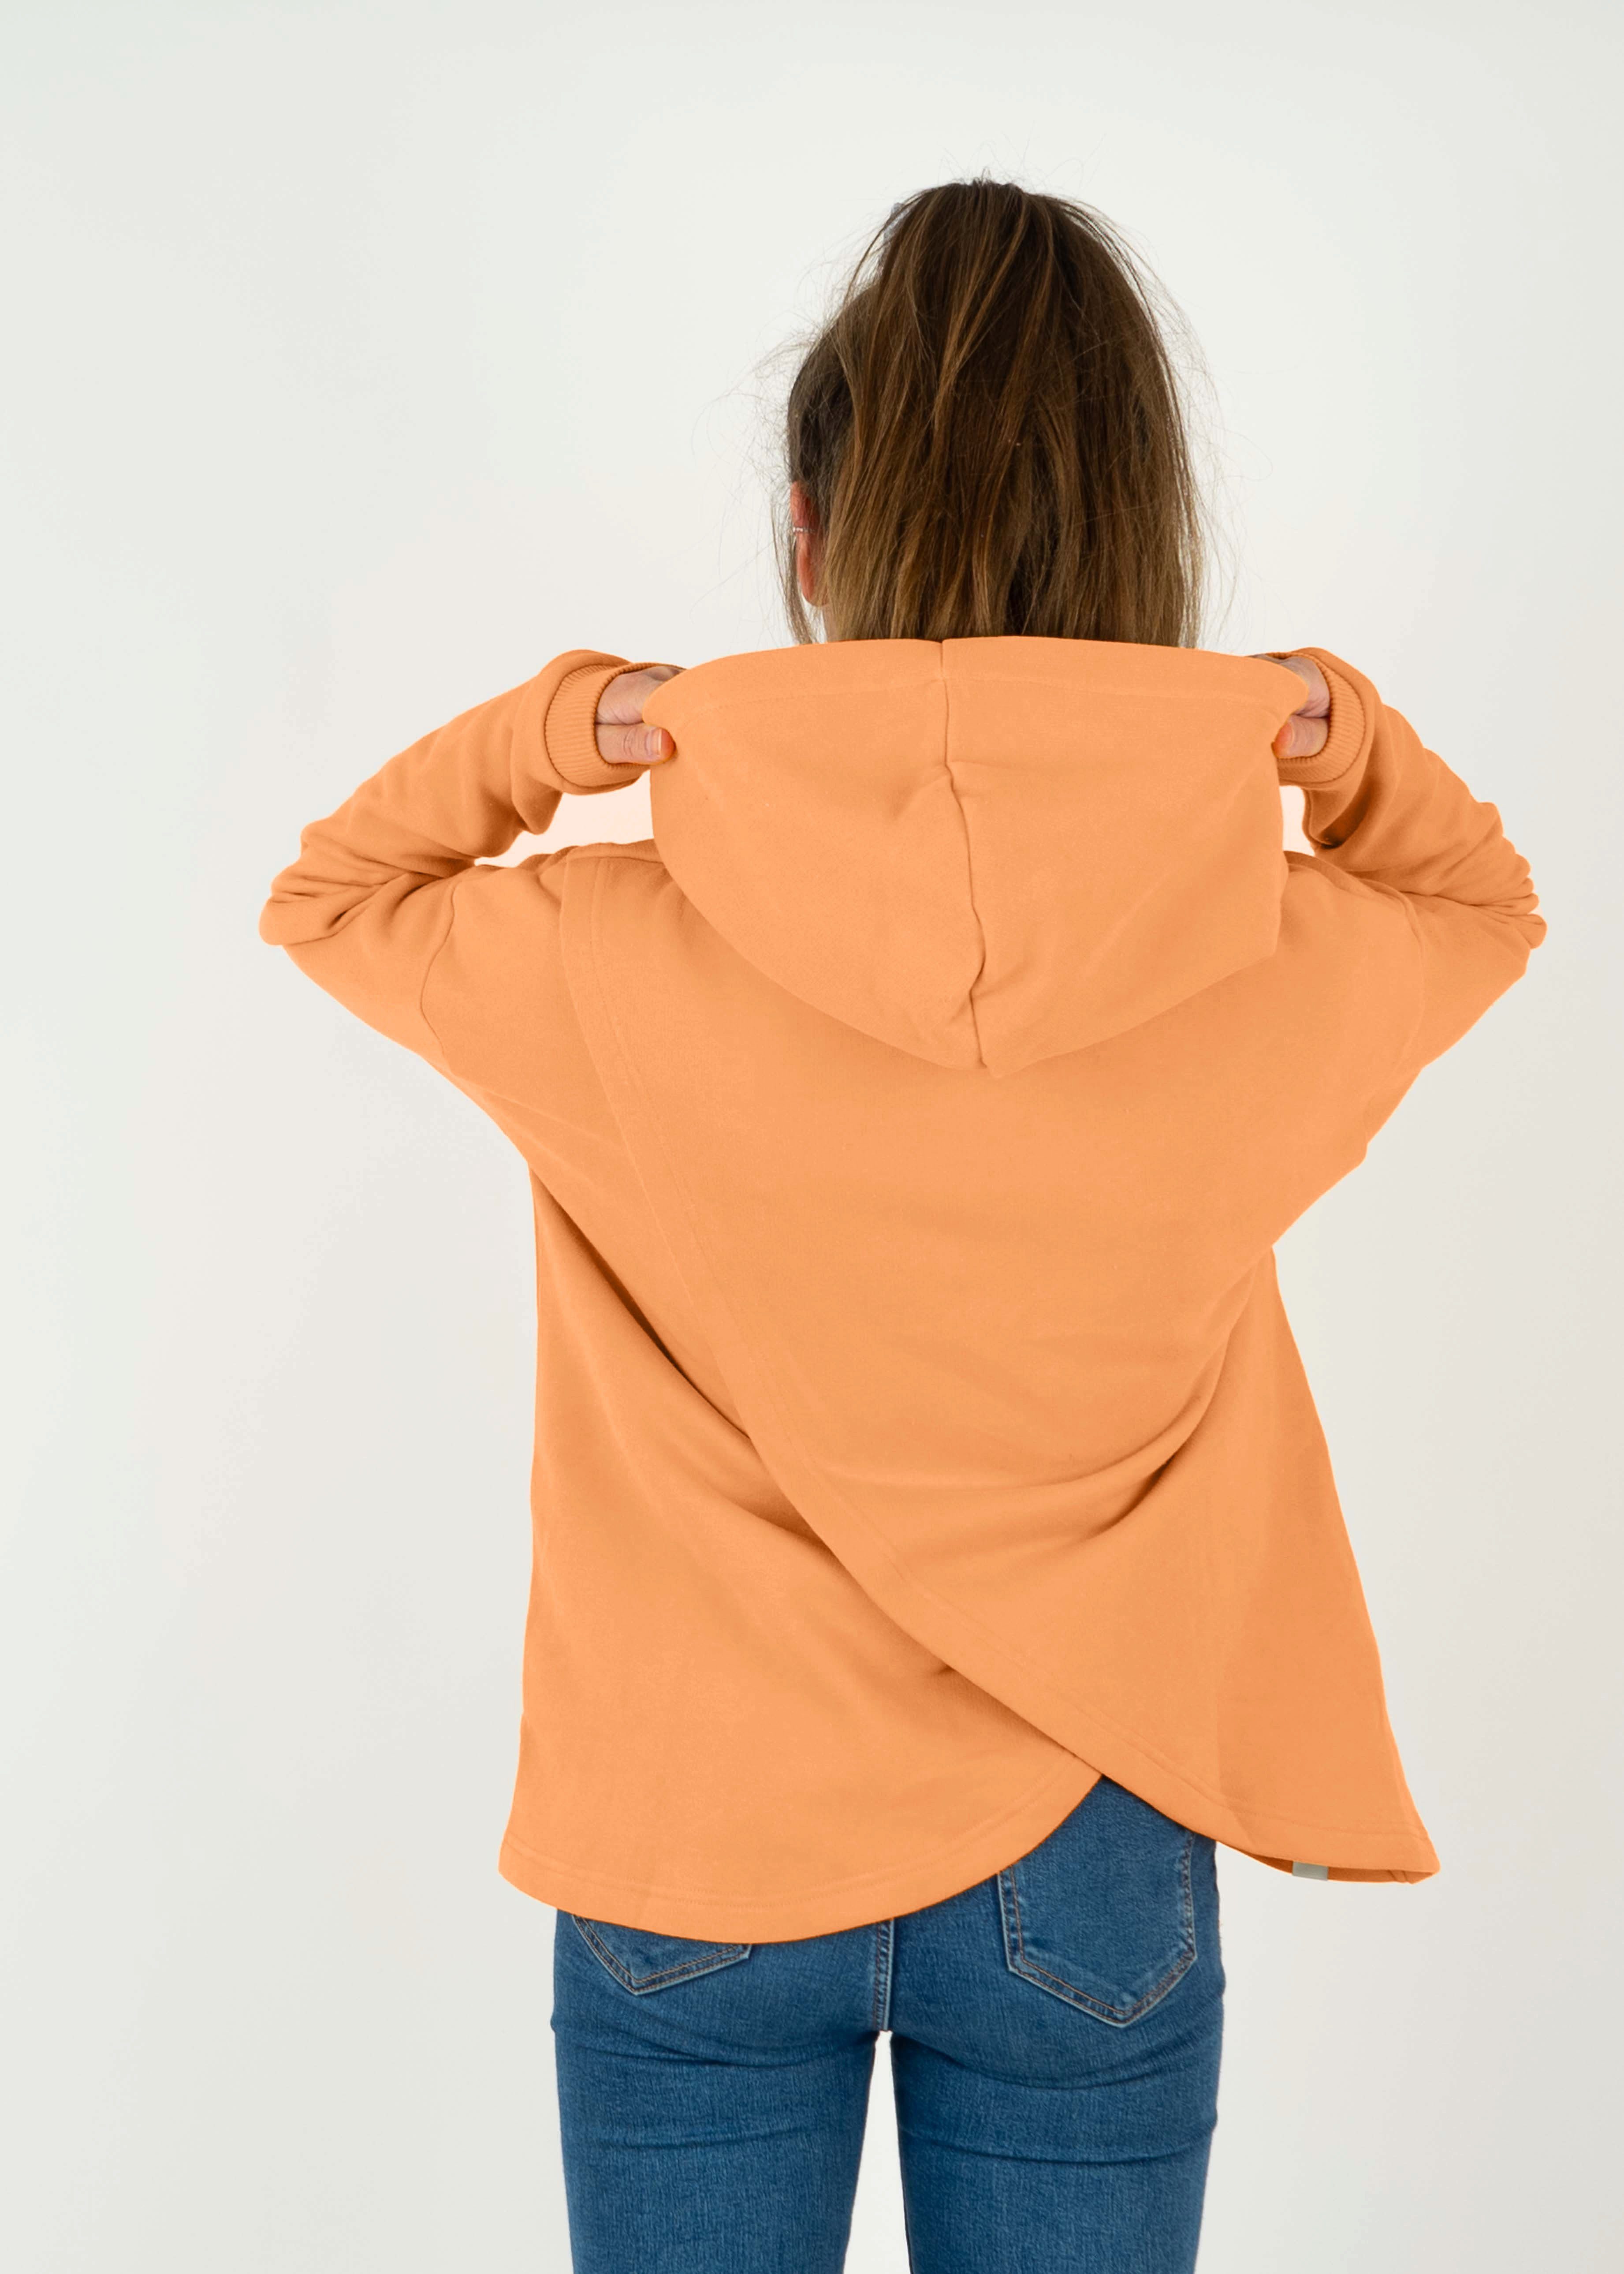 Tangerine Sweatshirt VINGER Noorlys